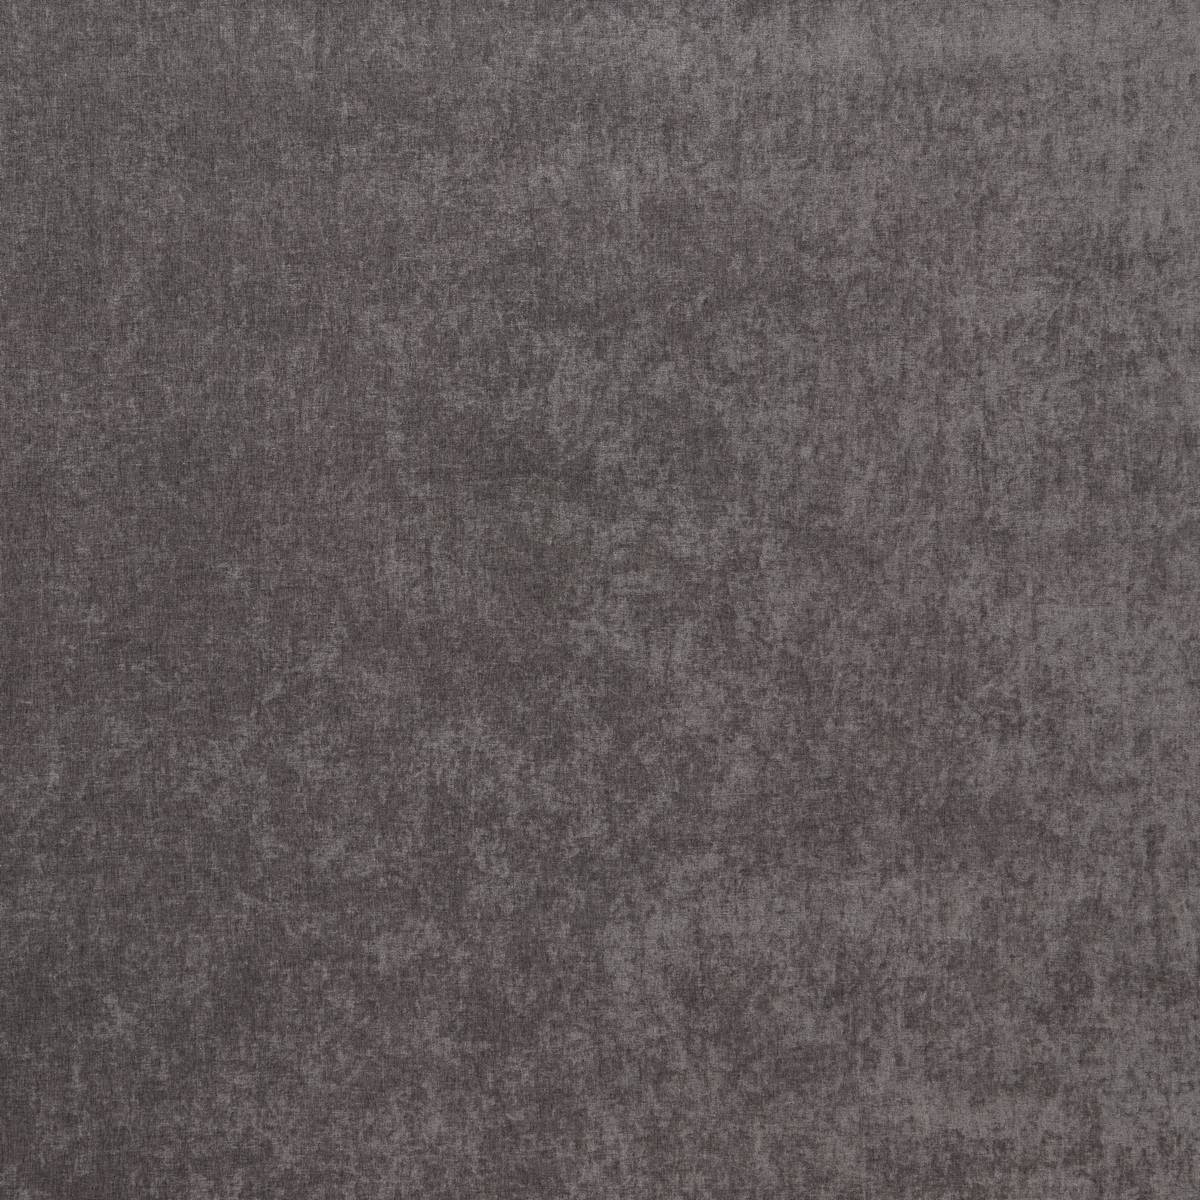 Belgravia Charcoal Fabric by iLiv